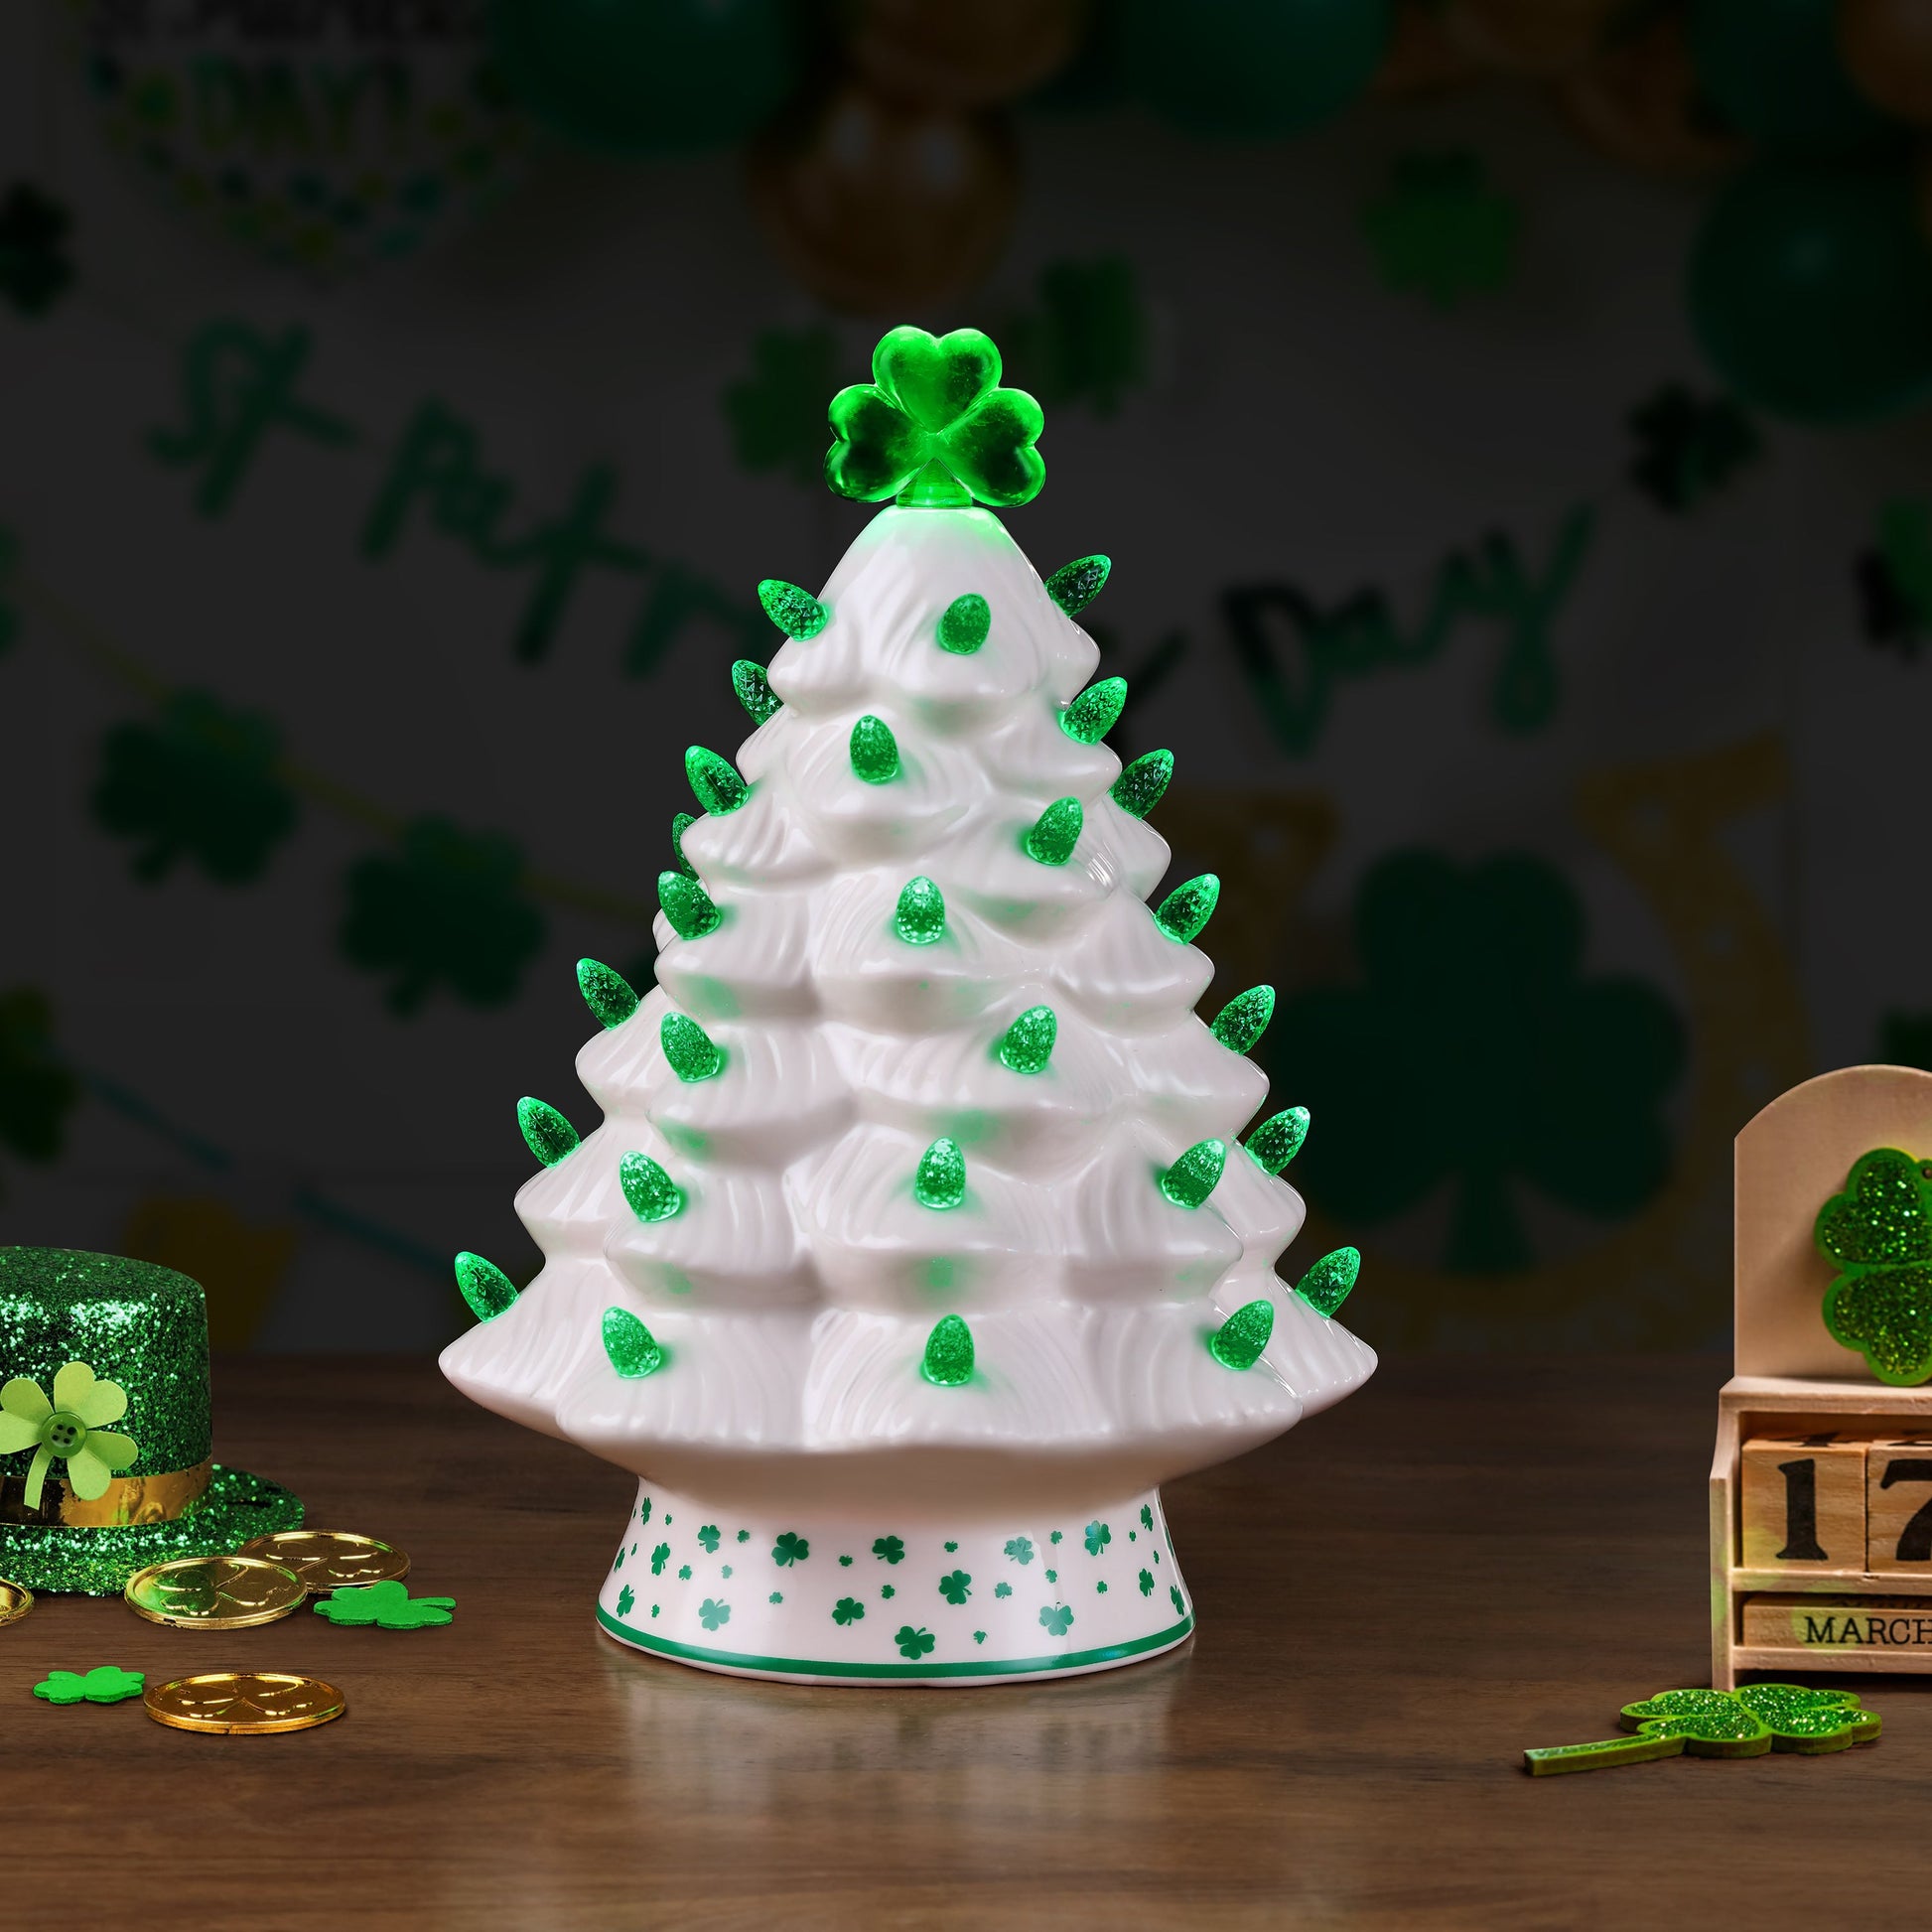 Mr. Lucky 10" Ceramic Shamrock Tree - Mr. Christmas